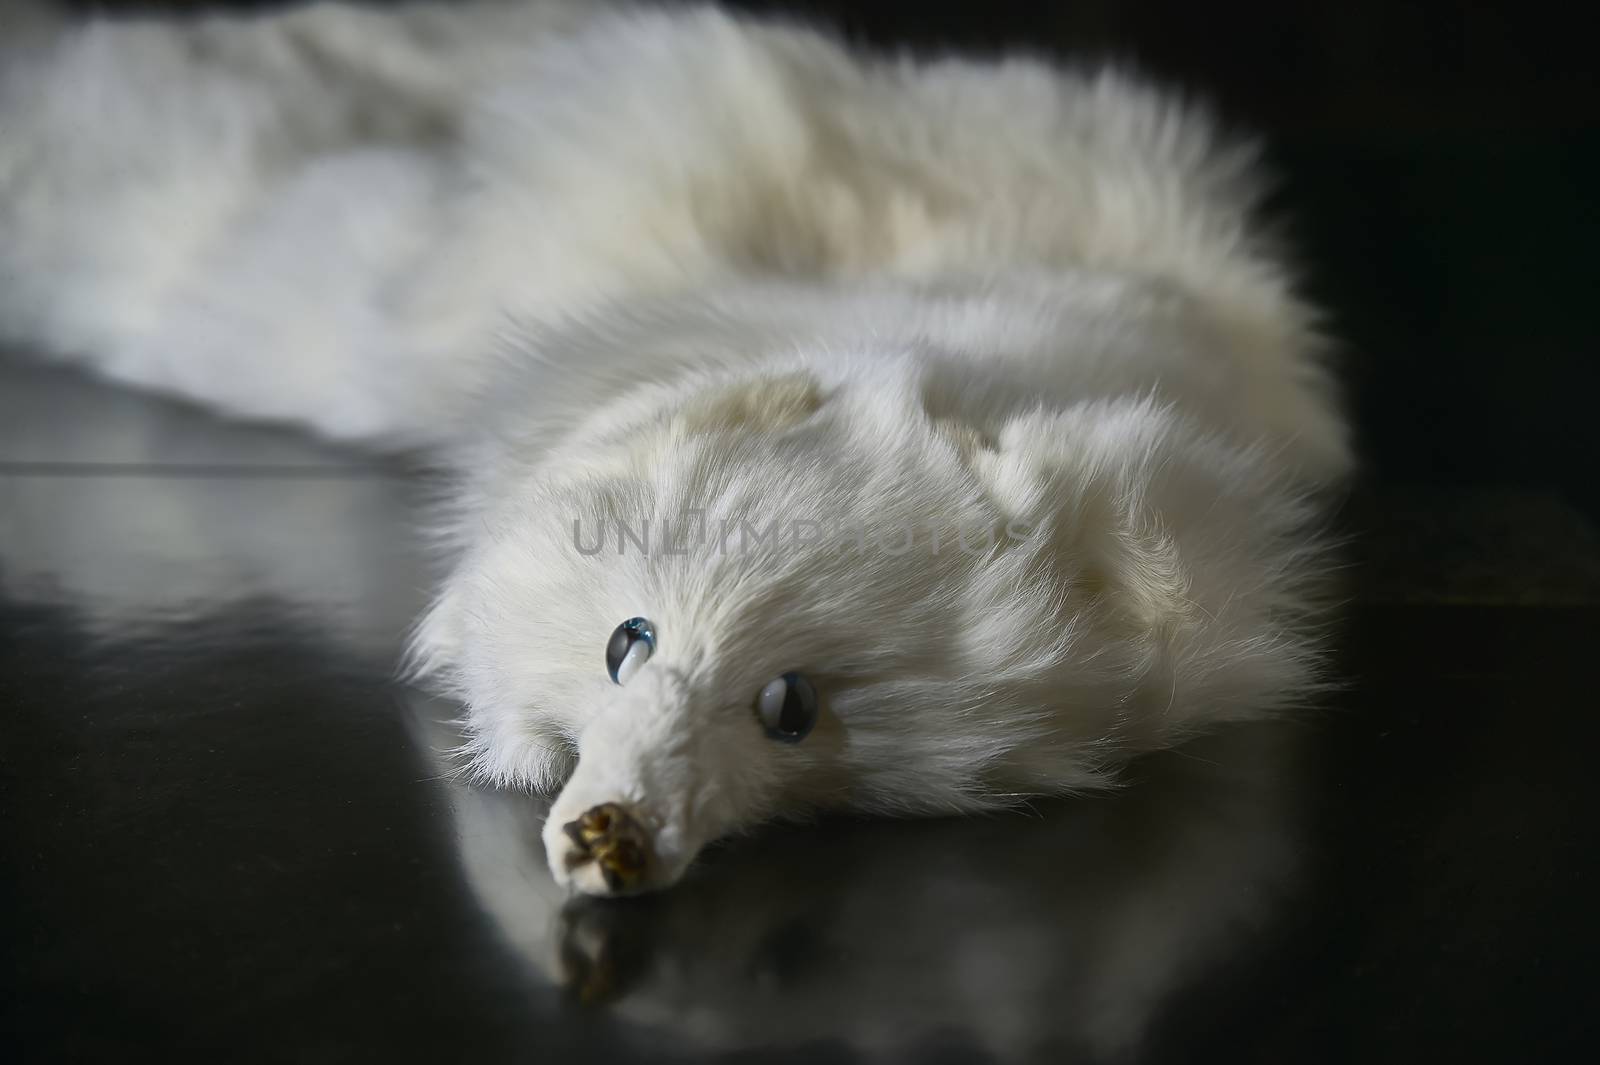 White-fox fur collar, horizontal shot